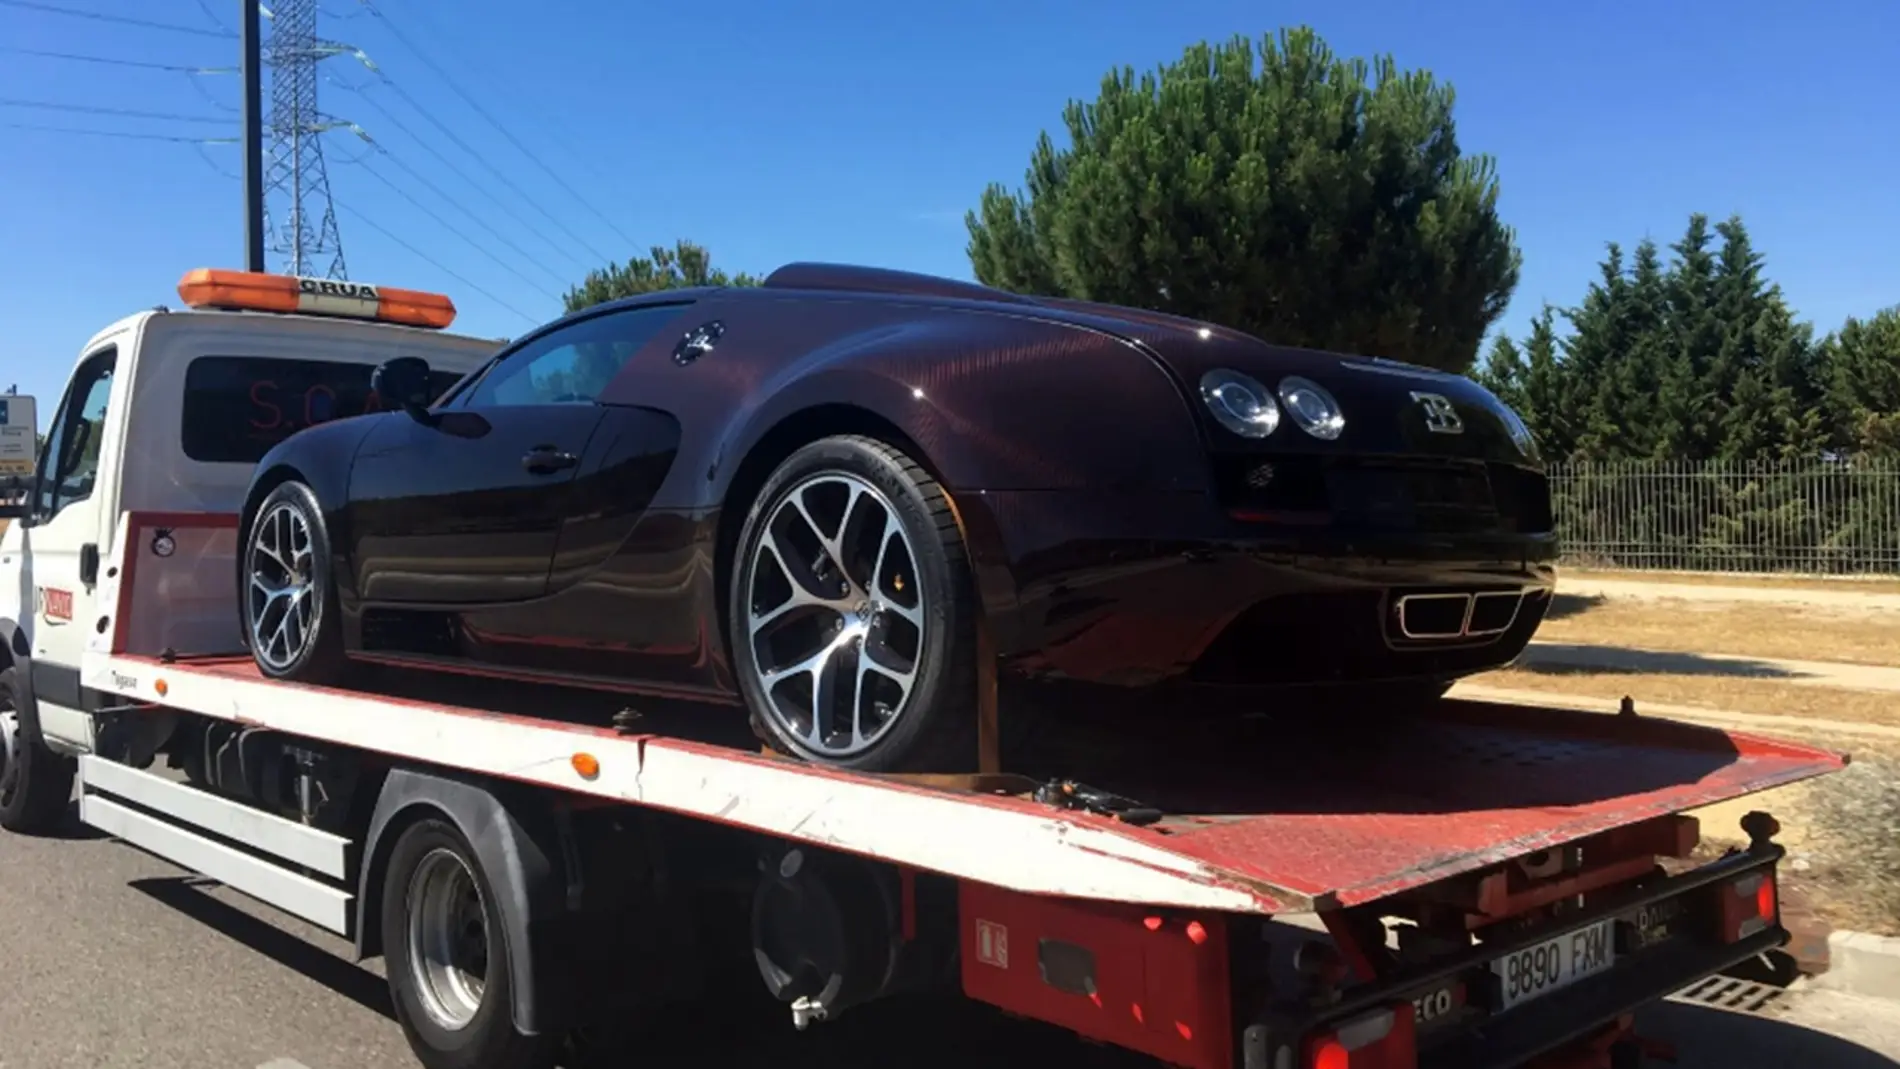 Bugatti-veyron-Cristiano-ronaldo-2016-01.jpg